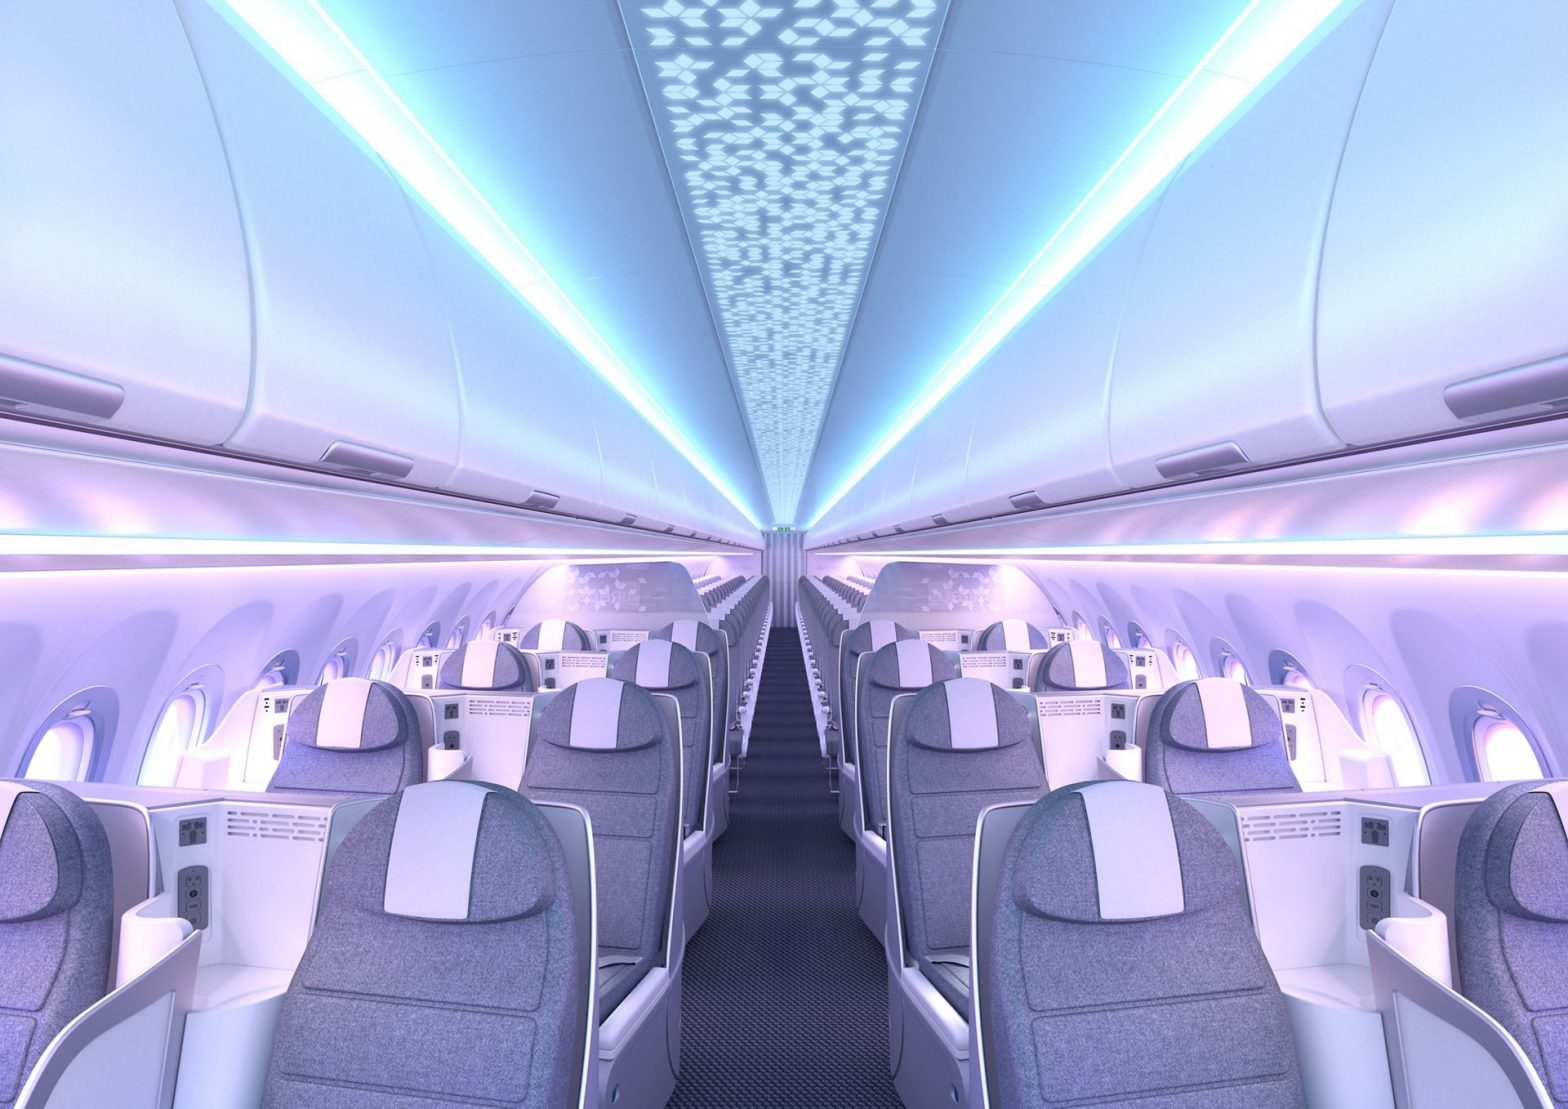 Aircraft interiors could kill covid19 says, AFRL Aviation Guide